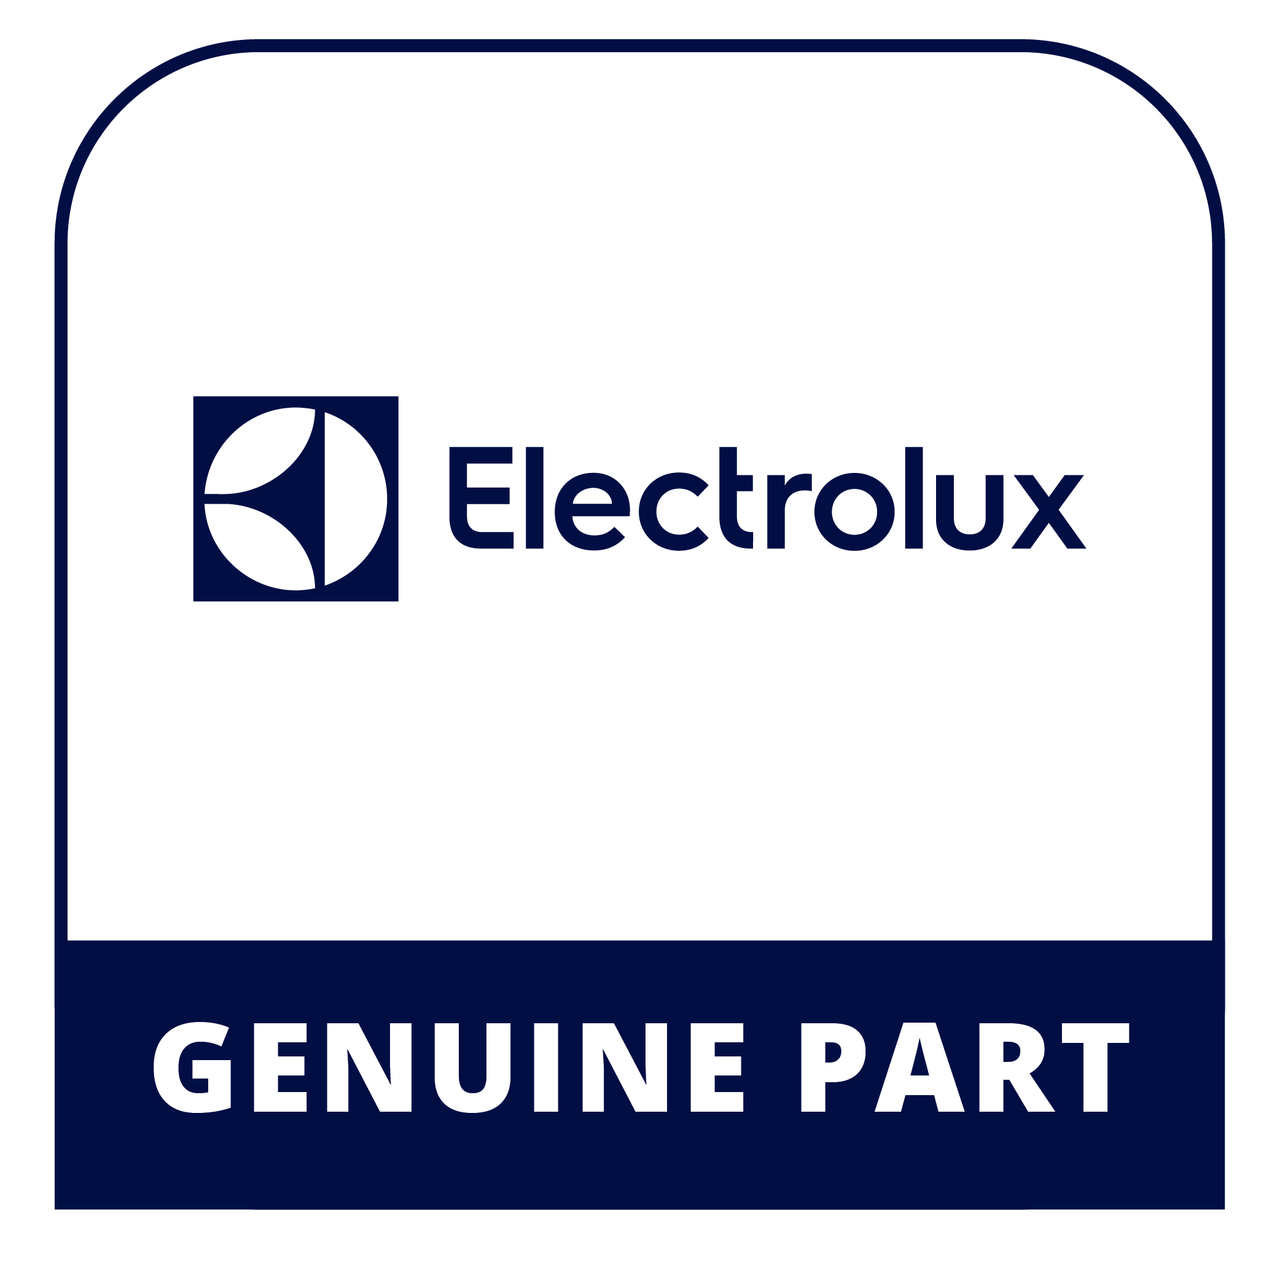 Frigidaire - Electrolux 5304499438 Compressor Kit C9 - Genuine Electrolux Part